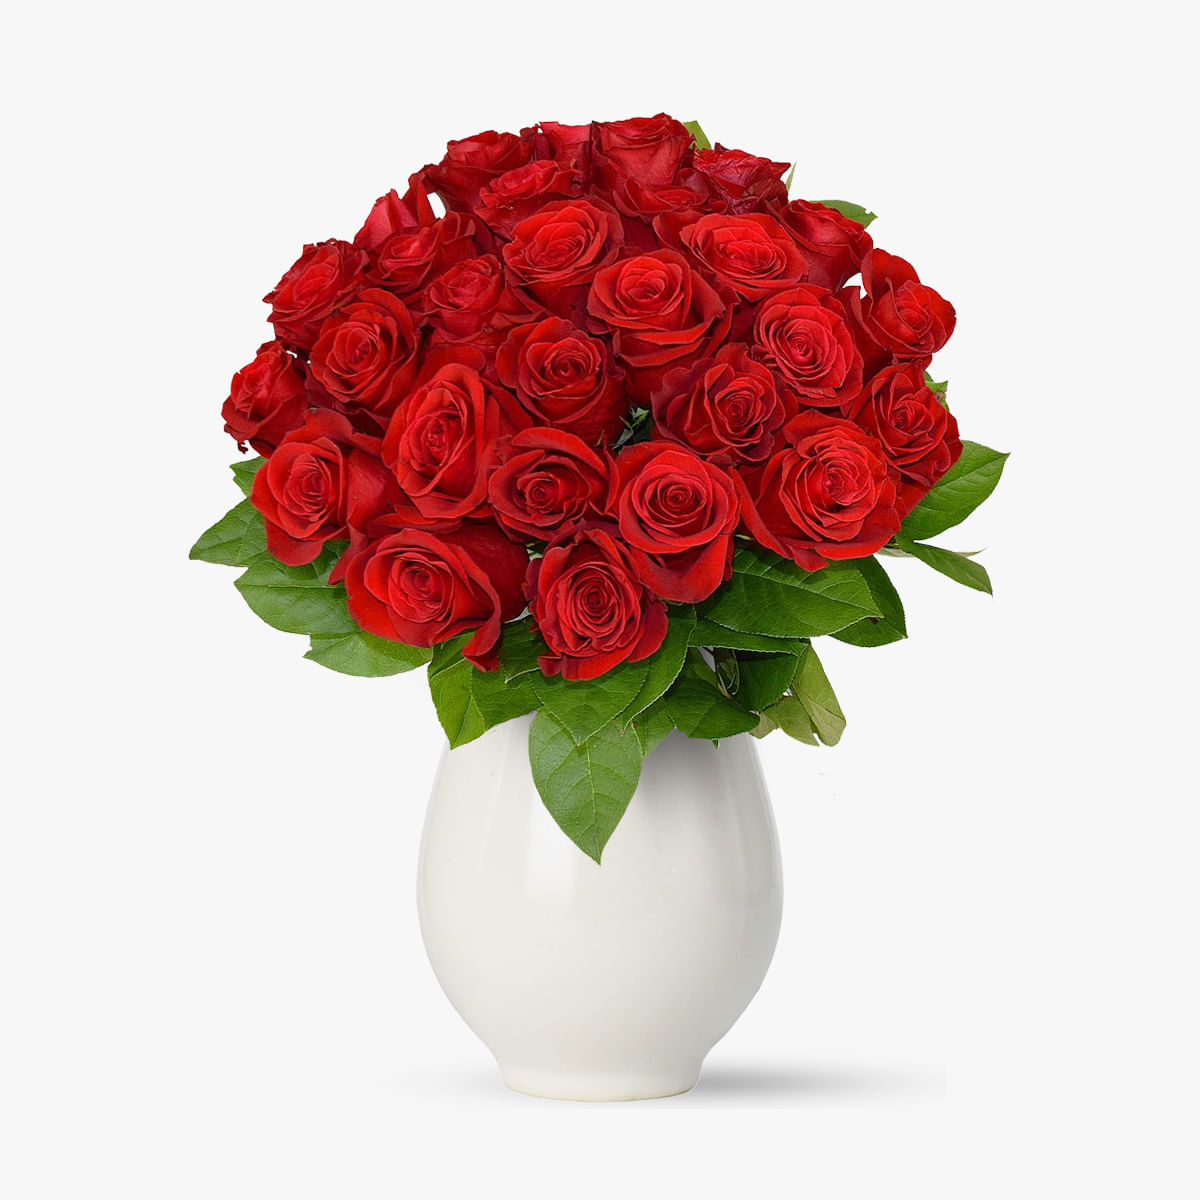 Buchet de 29 trandafiri rosii – Standard Buchet